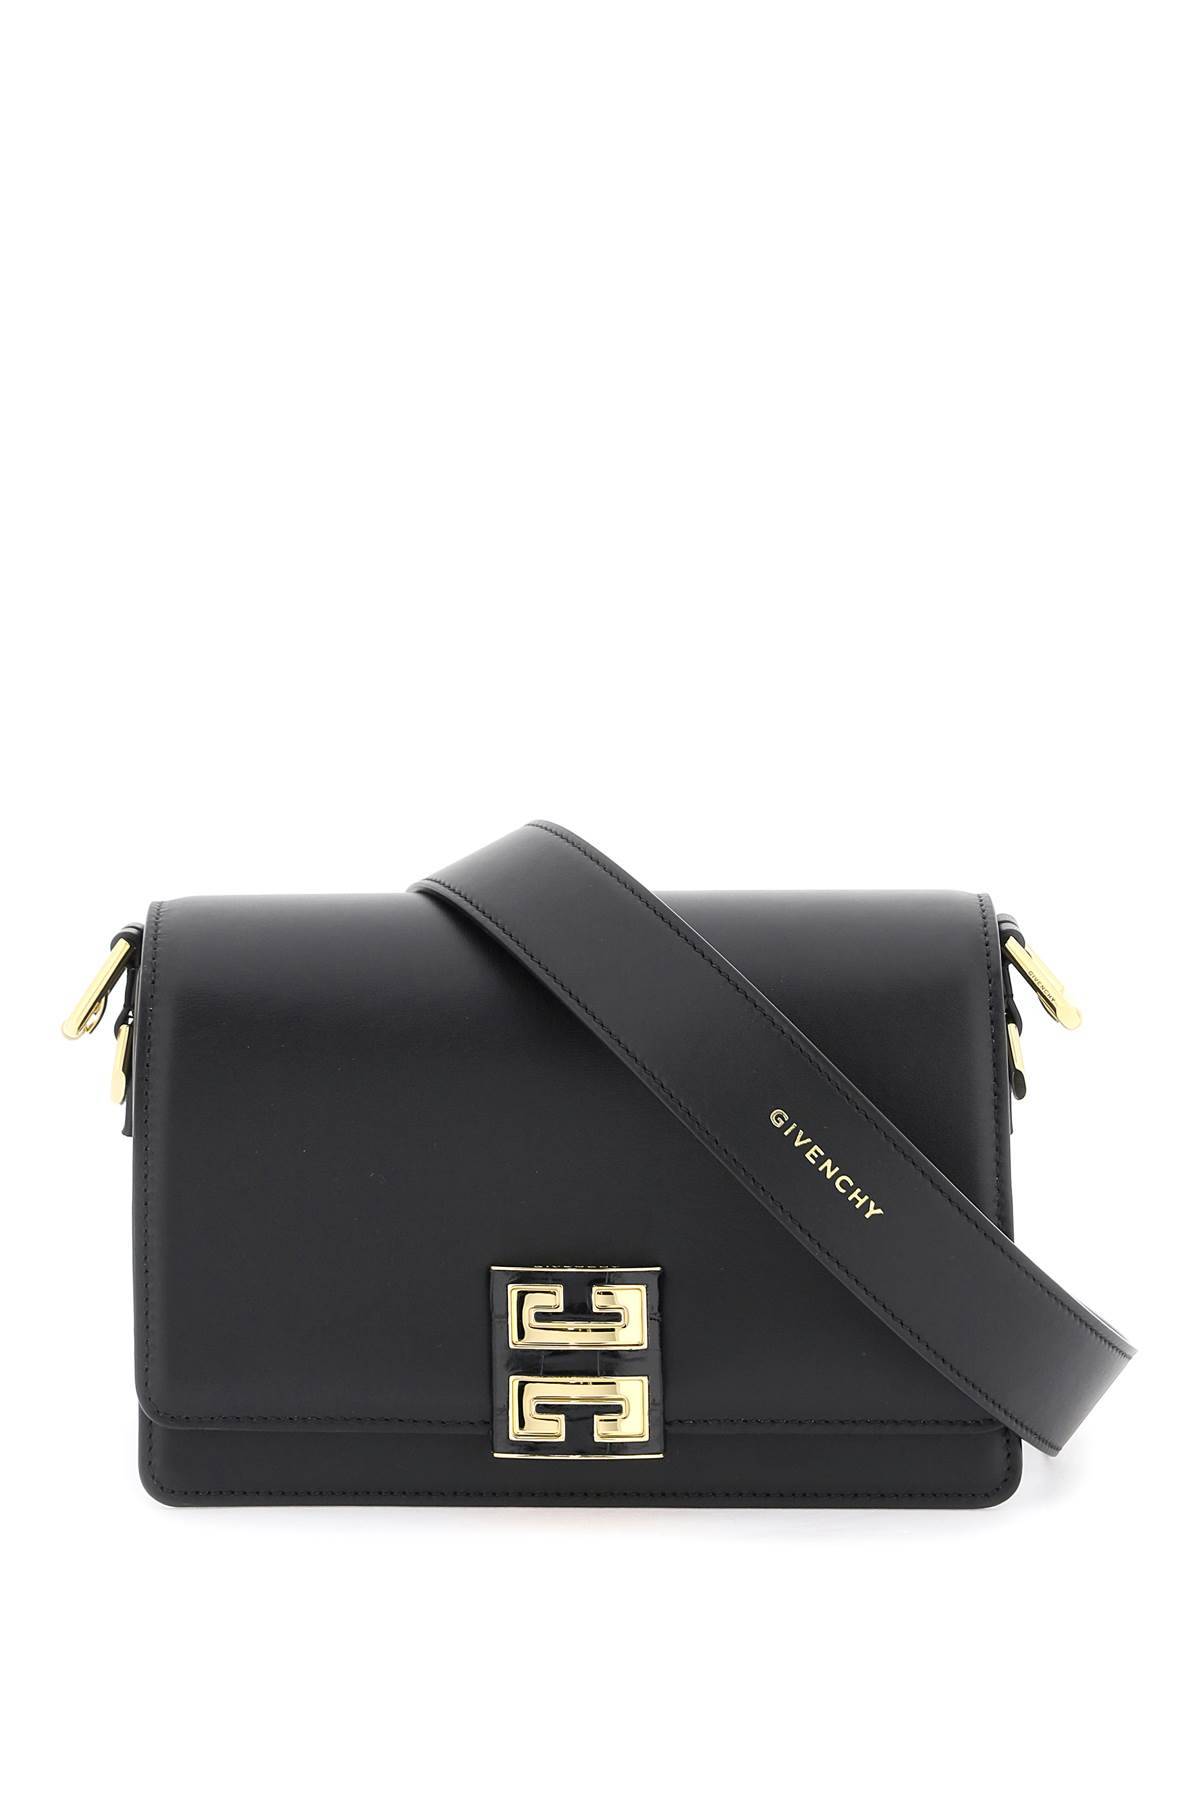 Givenchy Medium '4g' Box Leather Crossbody Bag In Black